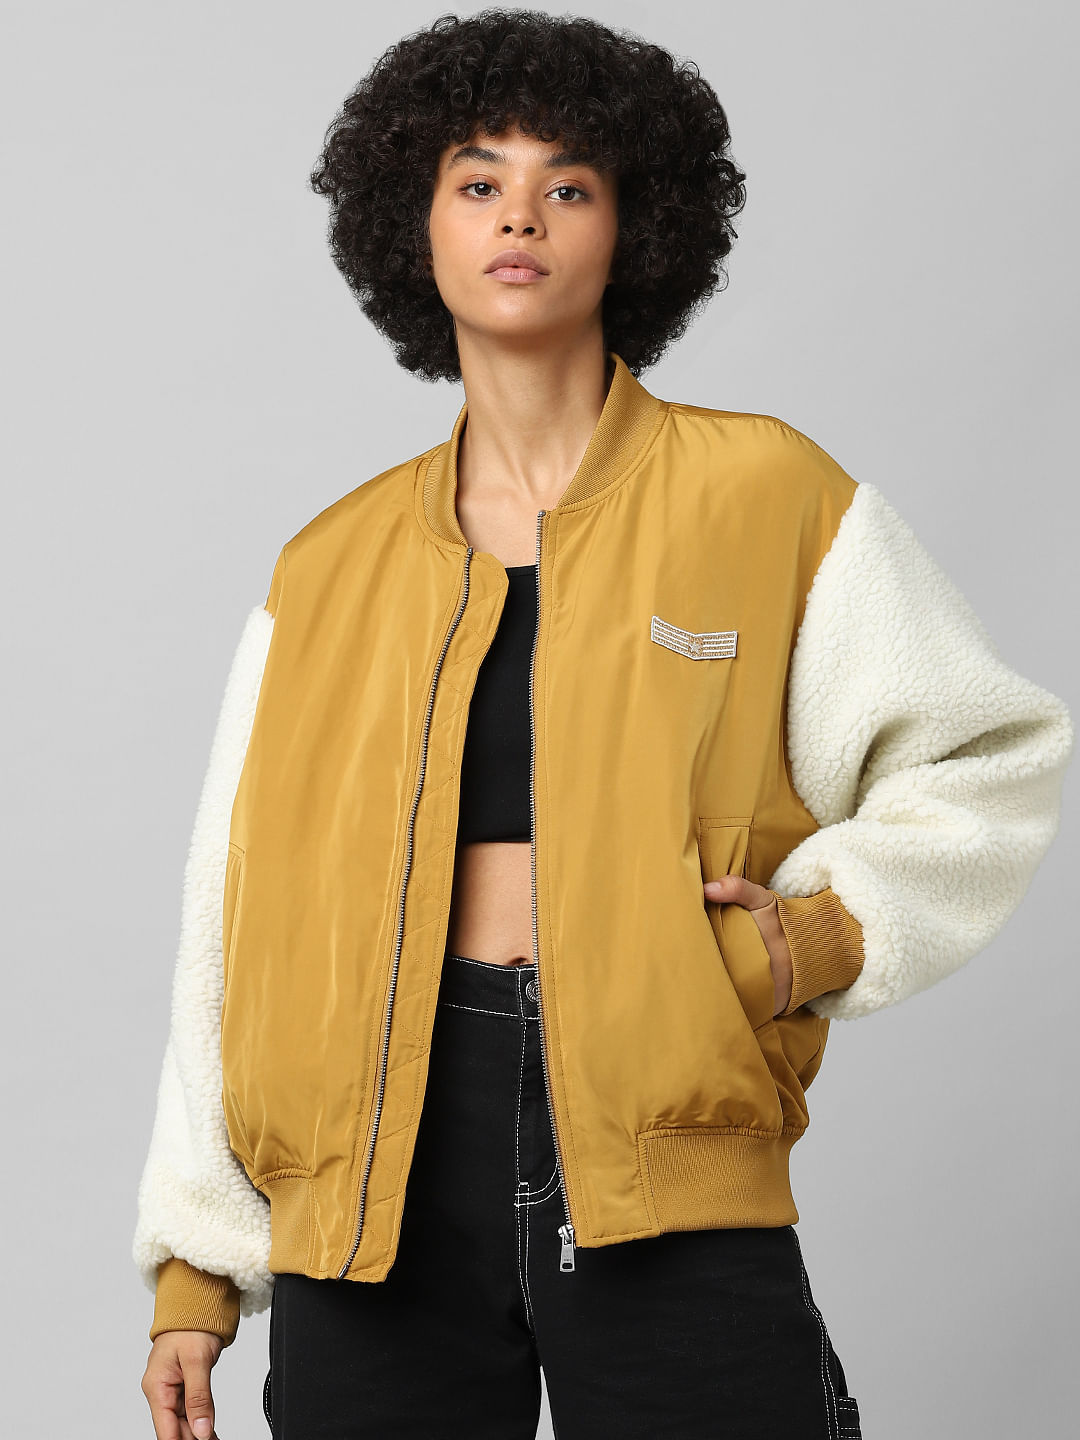 N & P jacket discount 83% WOMEN FASHION Jackets Bomber Black/Multicolored L 